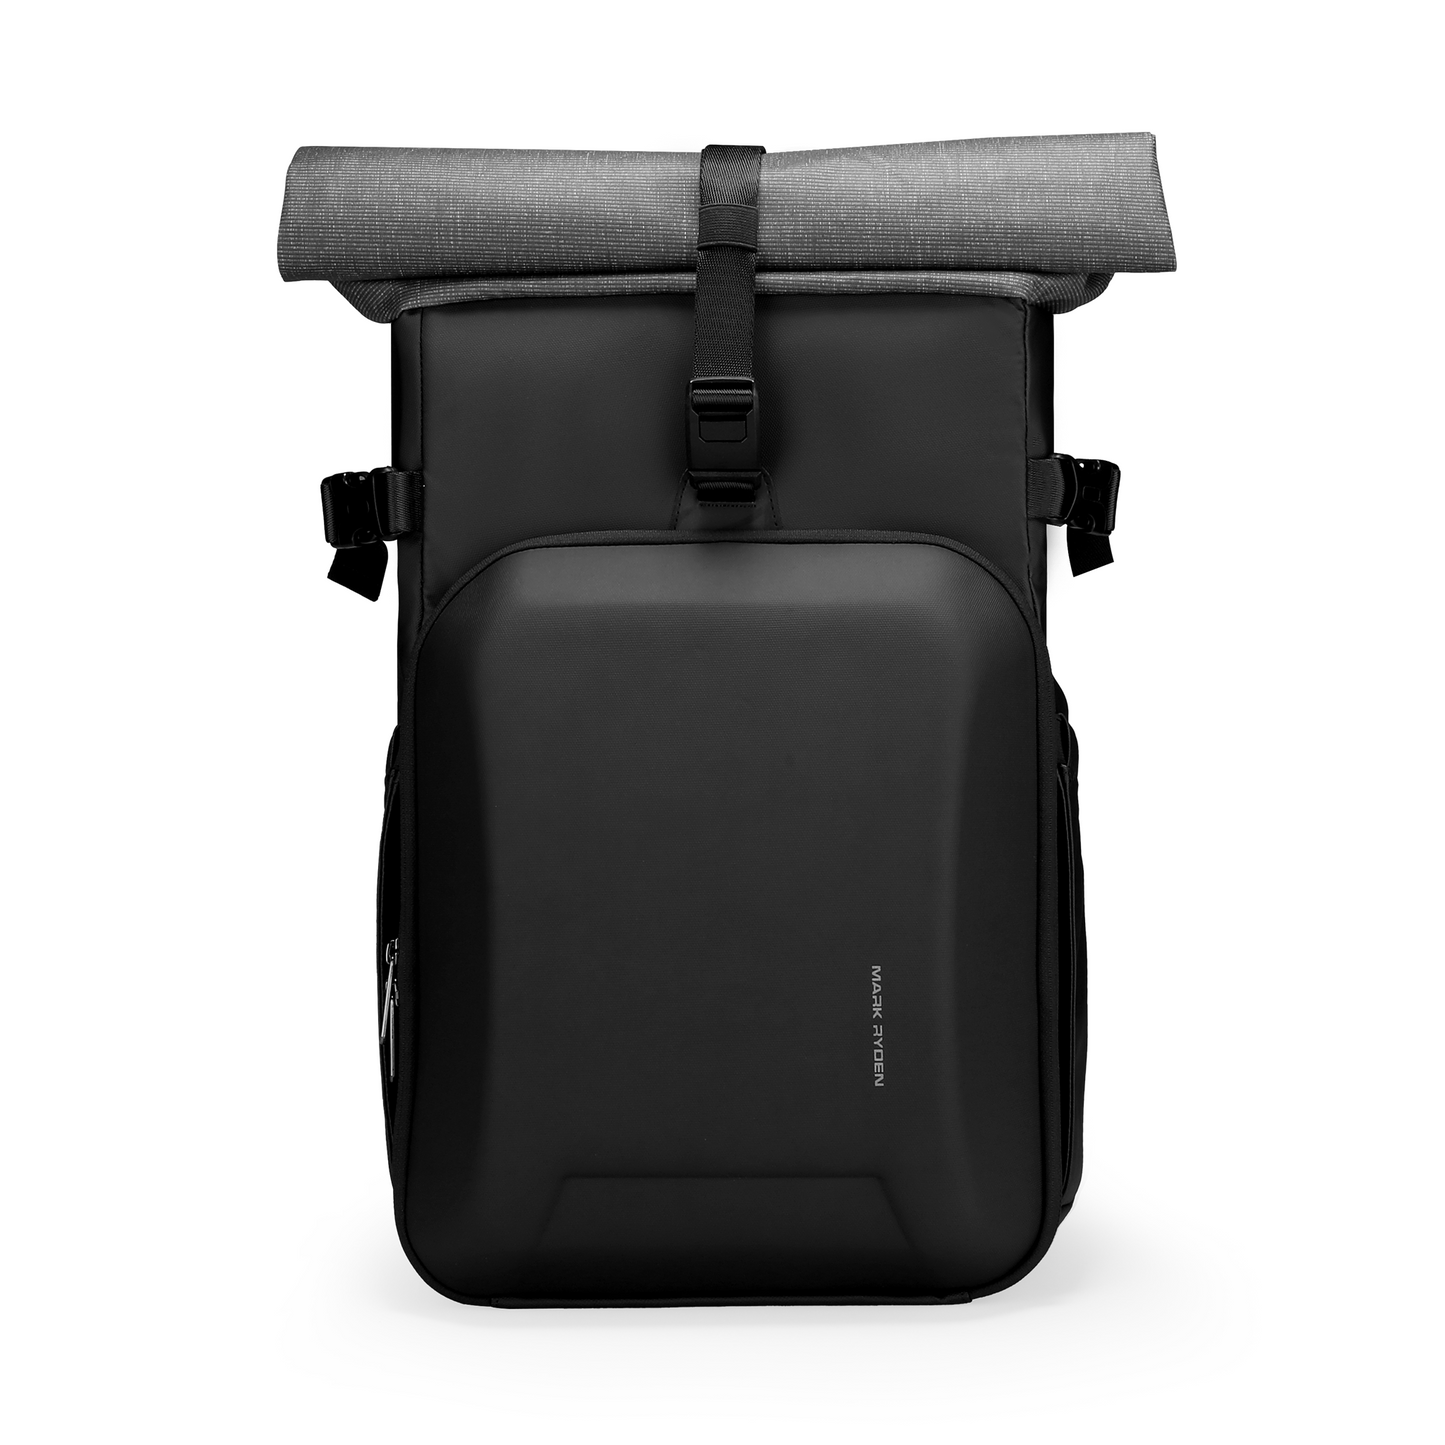 Aspect: Large-capacity Camera backpack